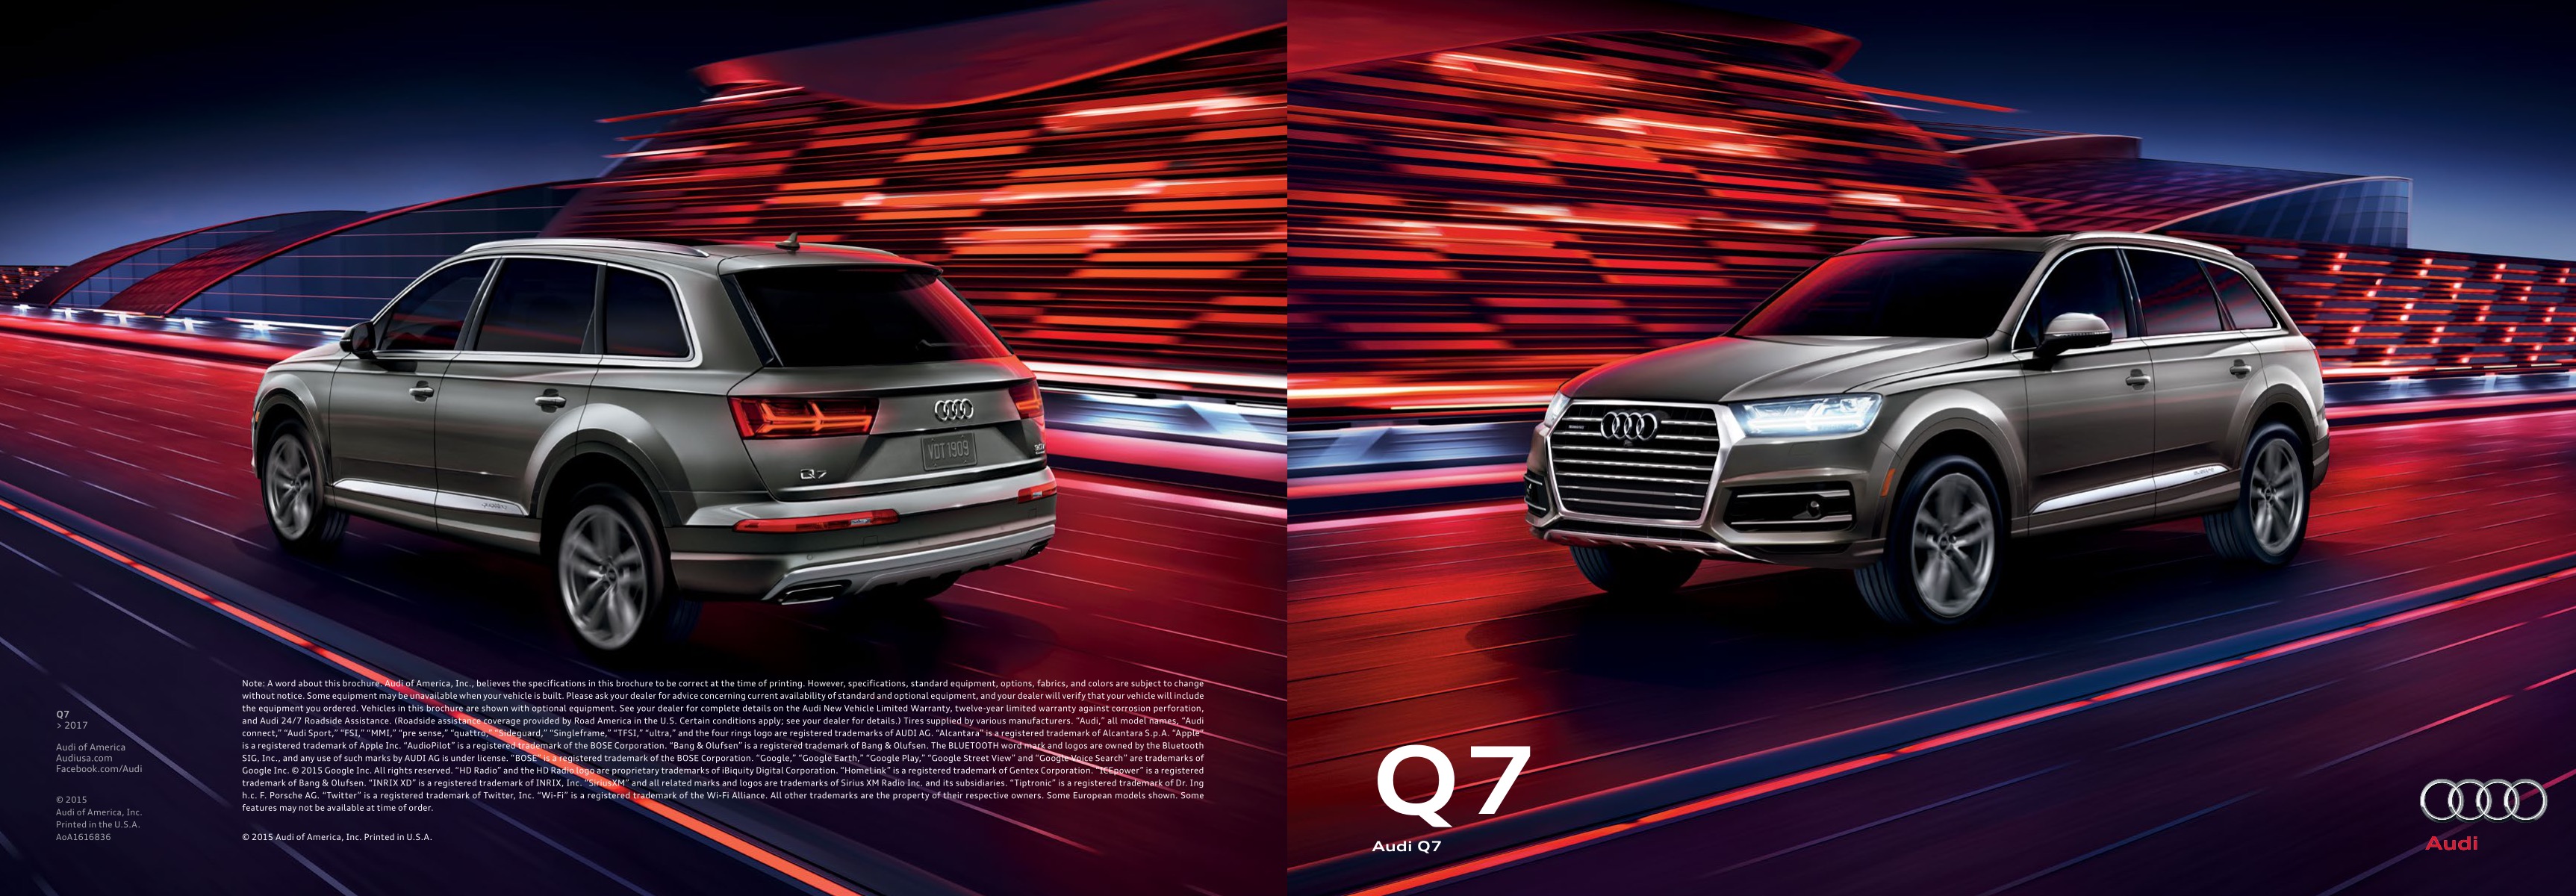 2017 Audi Q7 Brochure